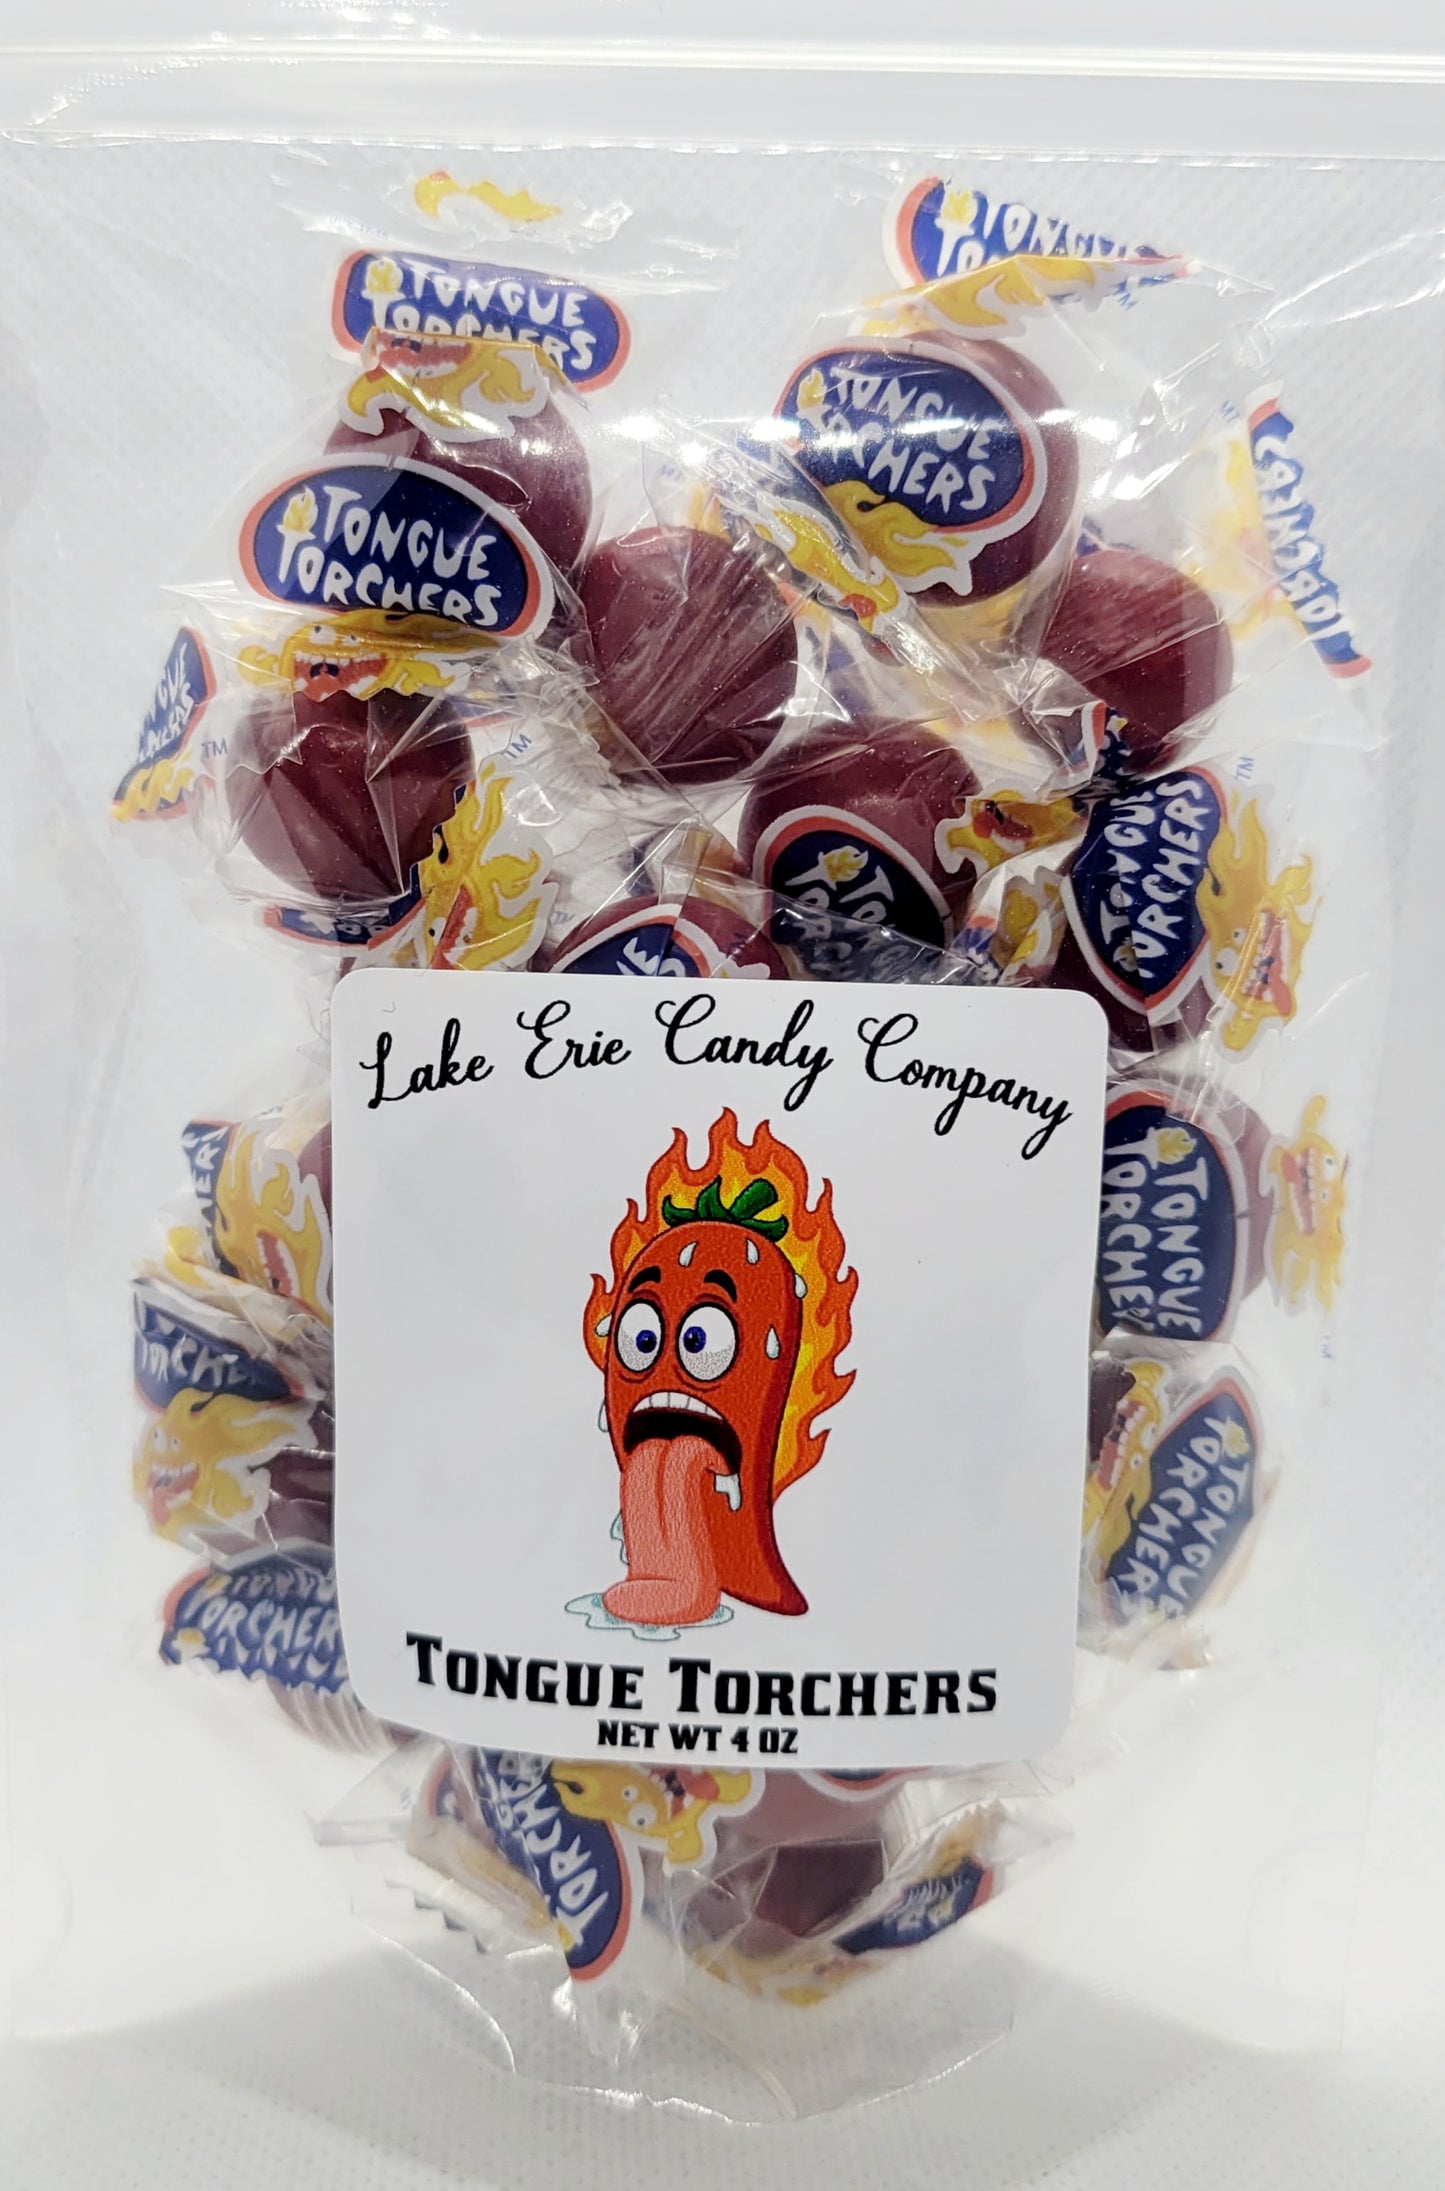 Tongue Torchers